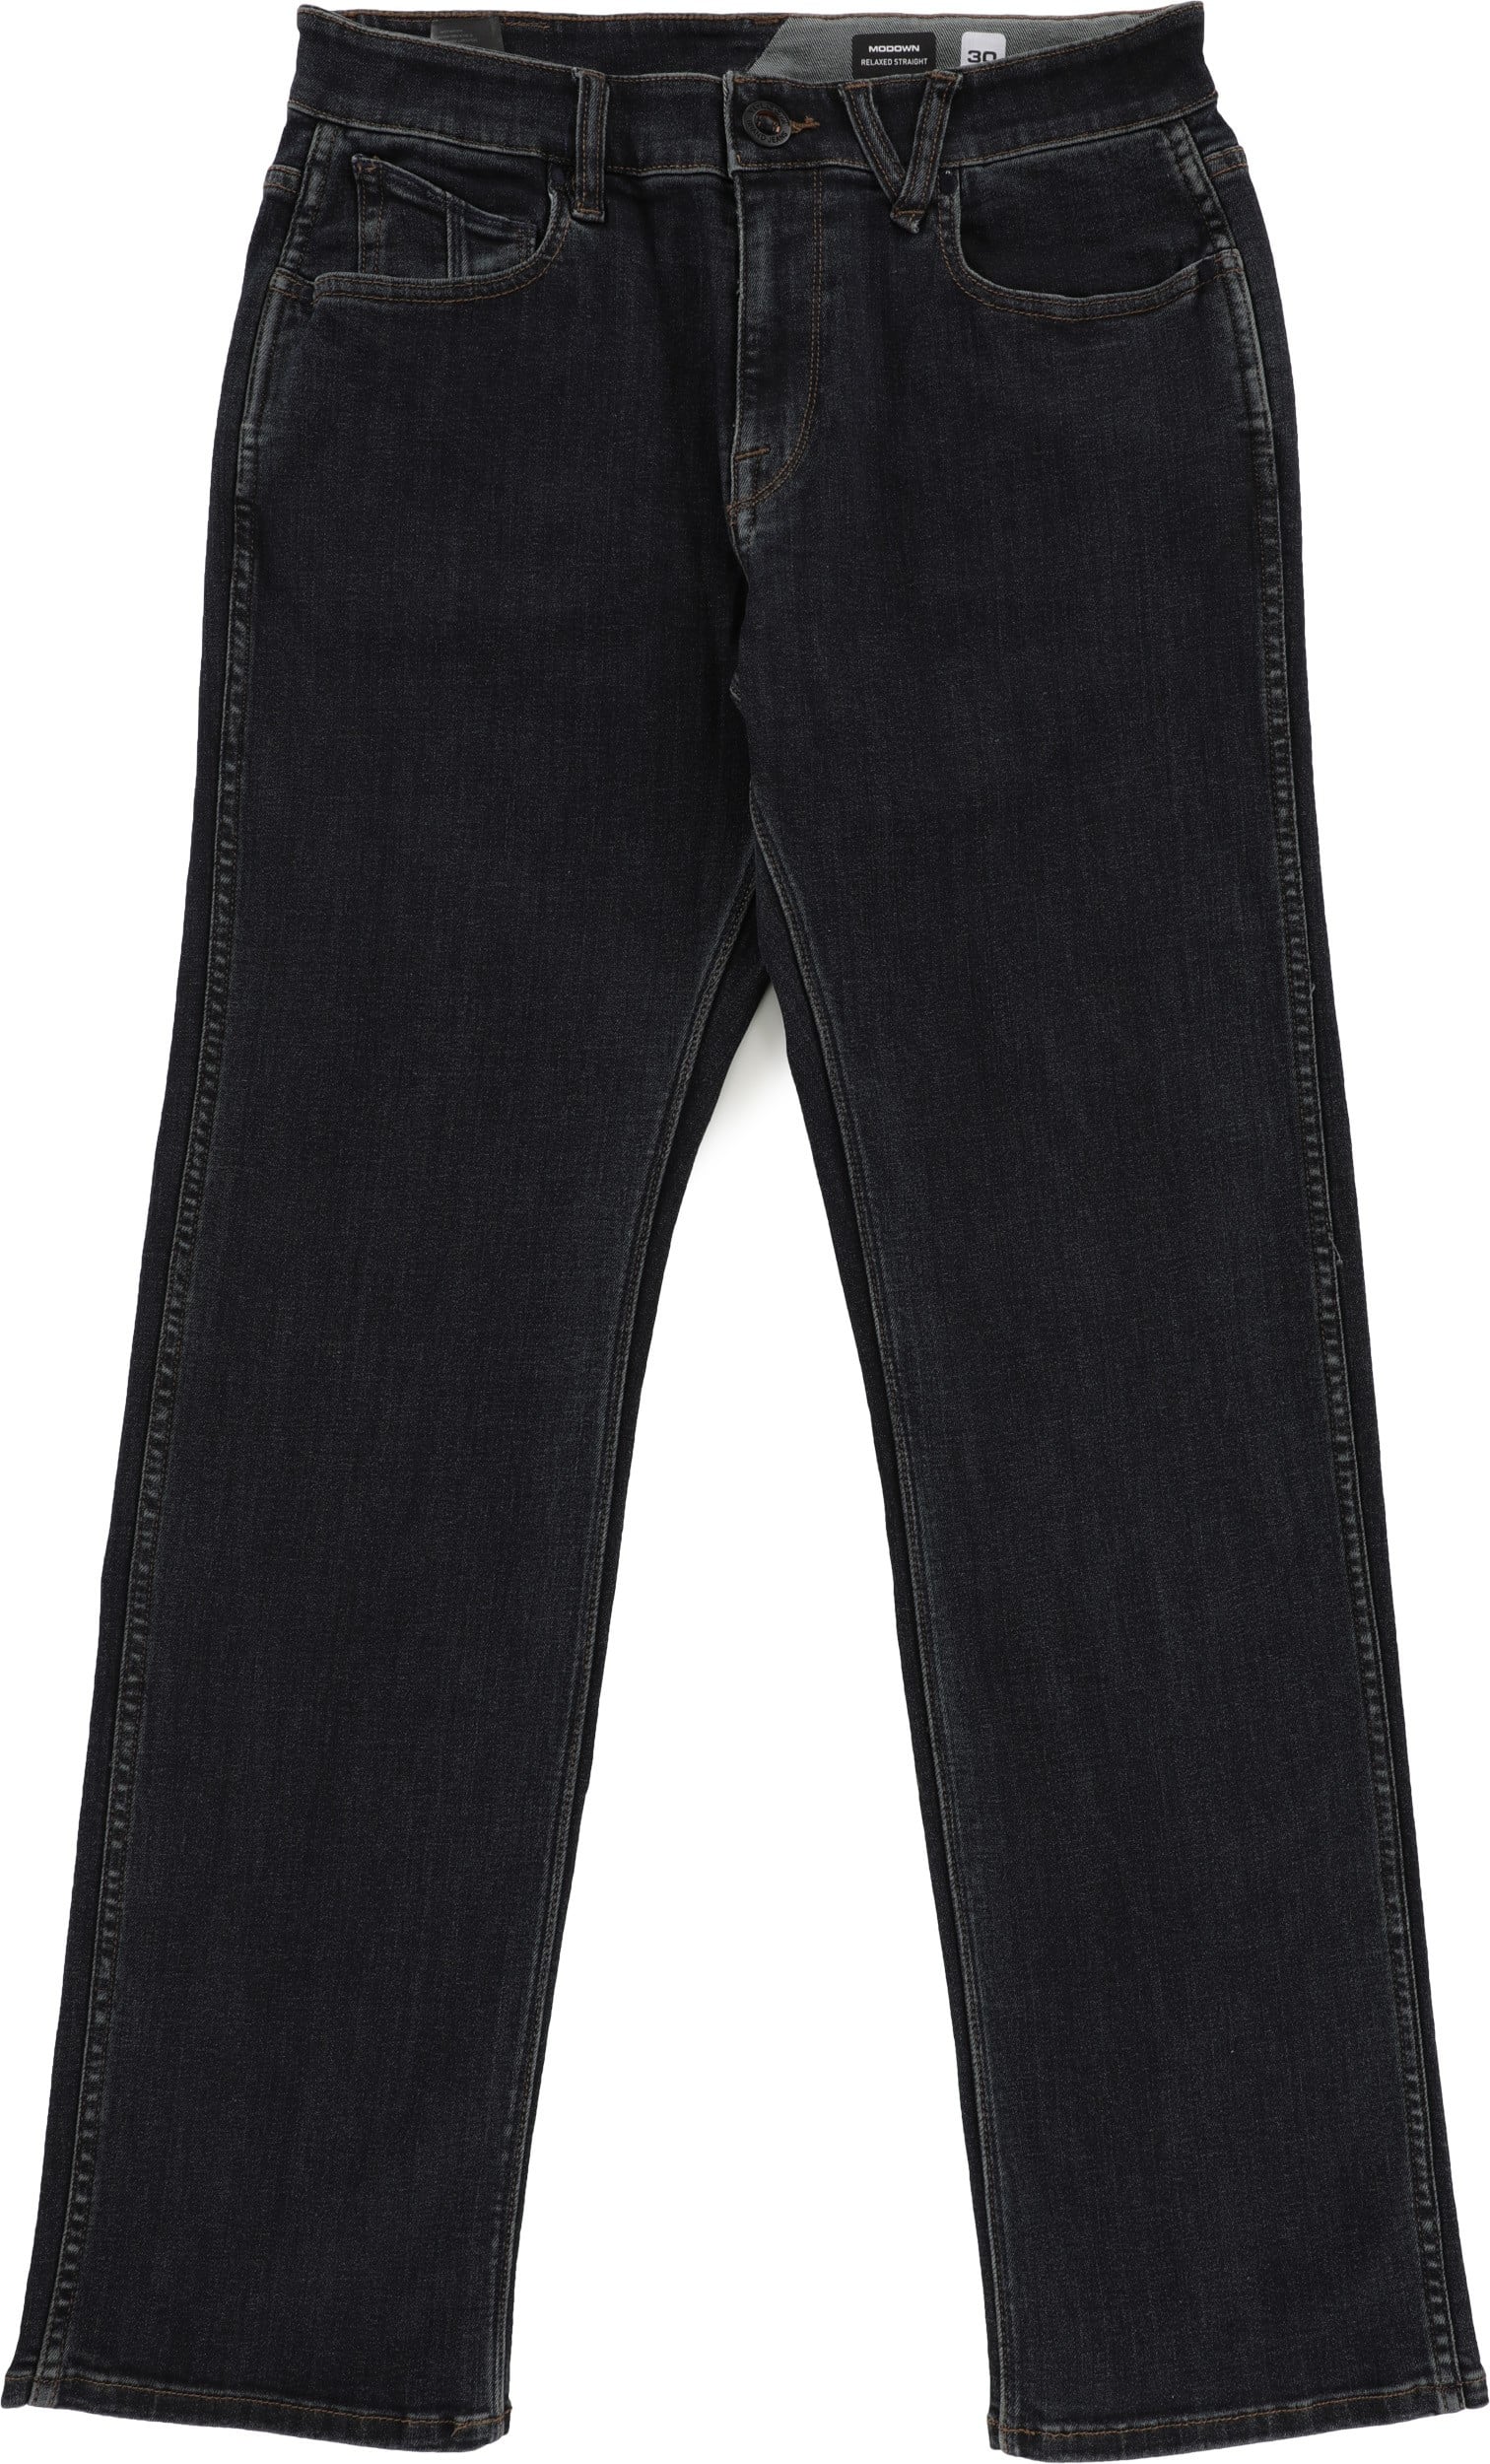 Volcom Modown Jeans - dark vintage indigo | Tactics